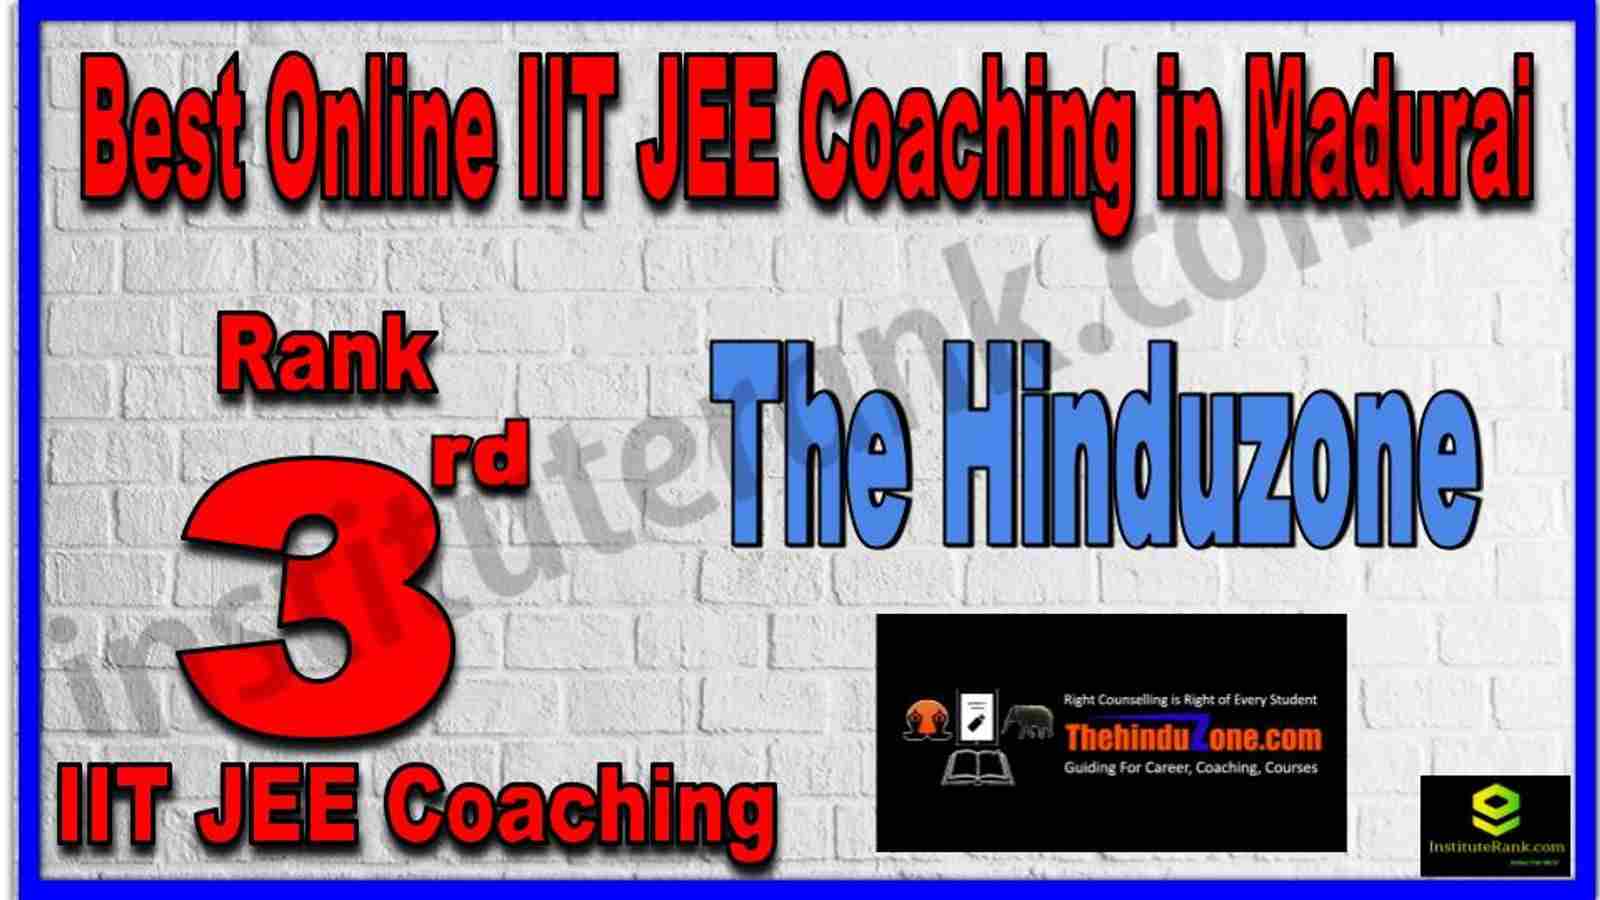 Rank 3rd Best Online IIT JEE Coaching in Madurai